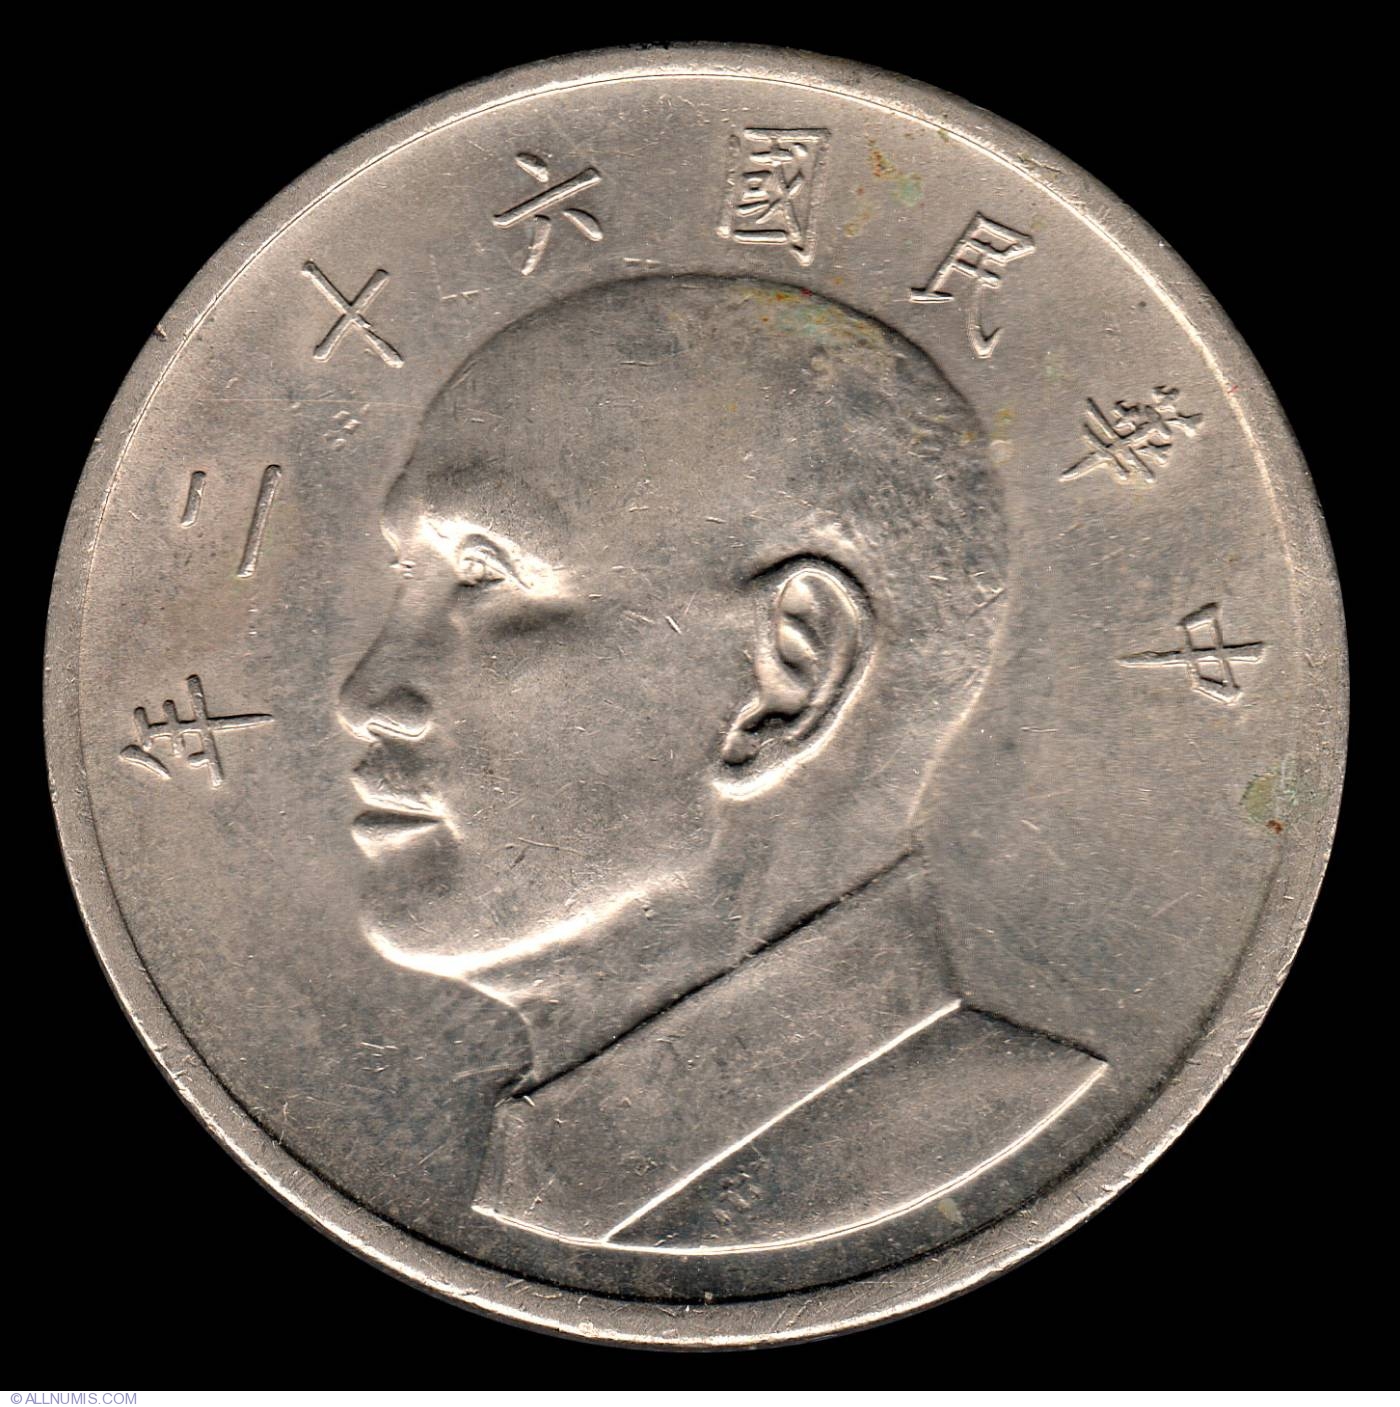 5 Yuan Coins images